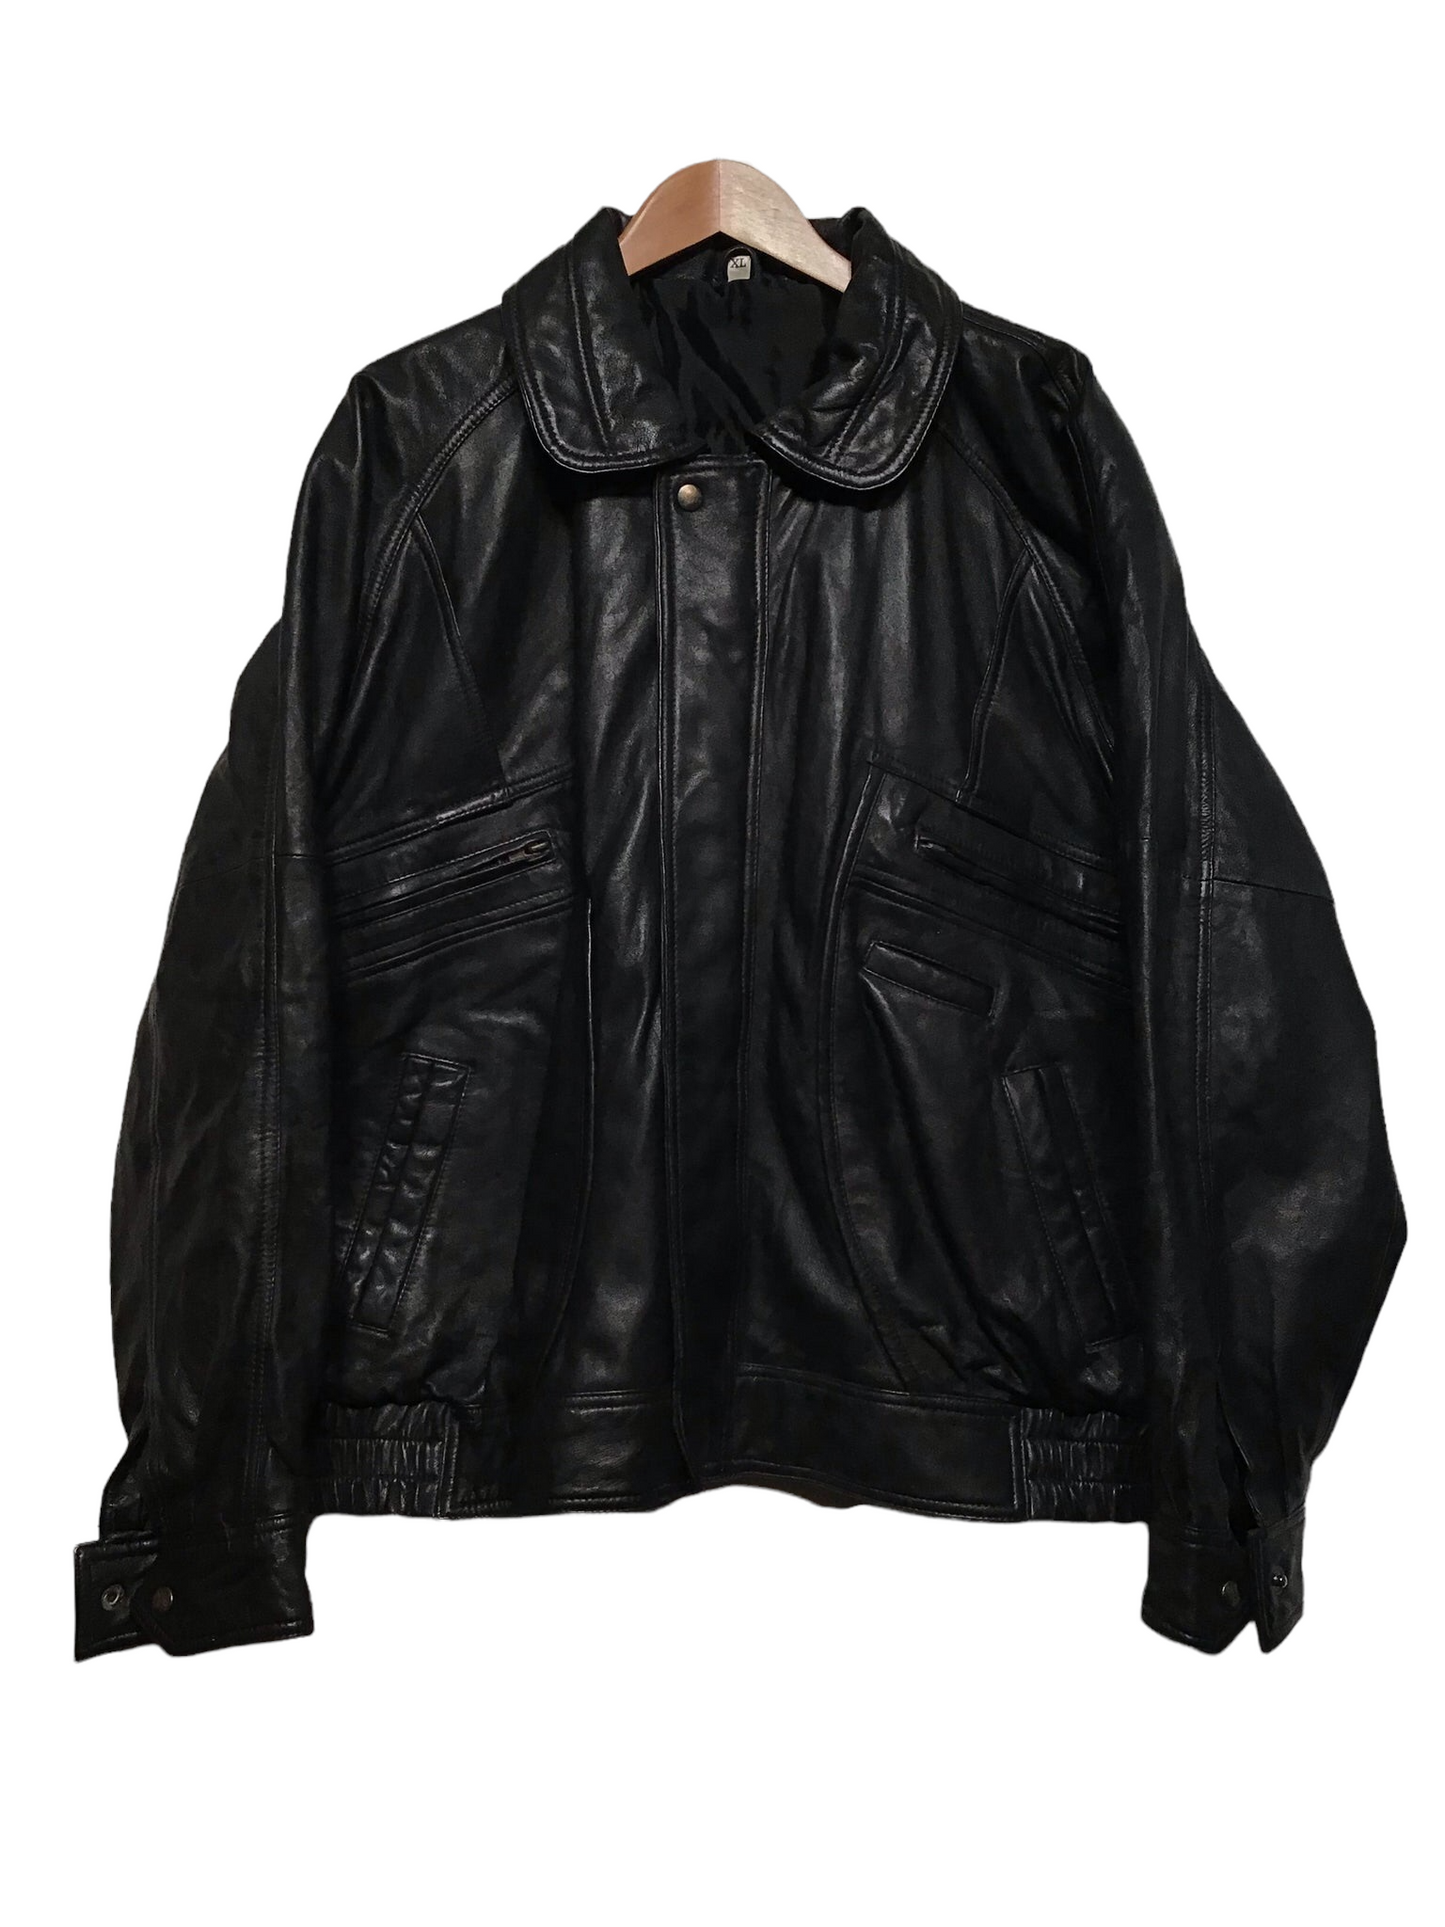 Black Leather Jacket (Size L)